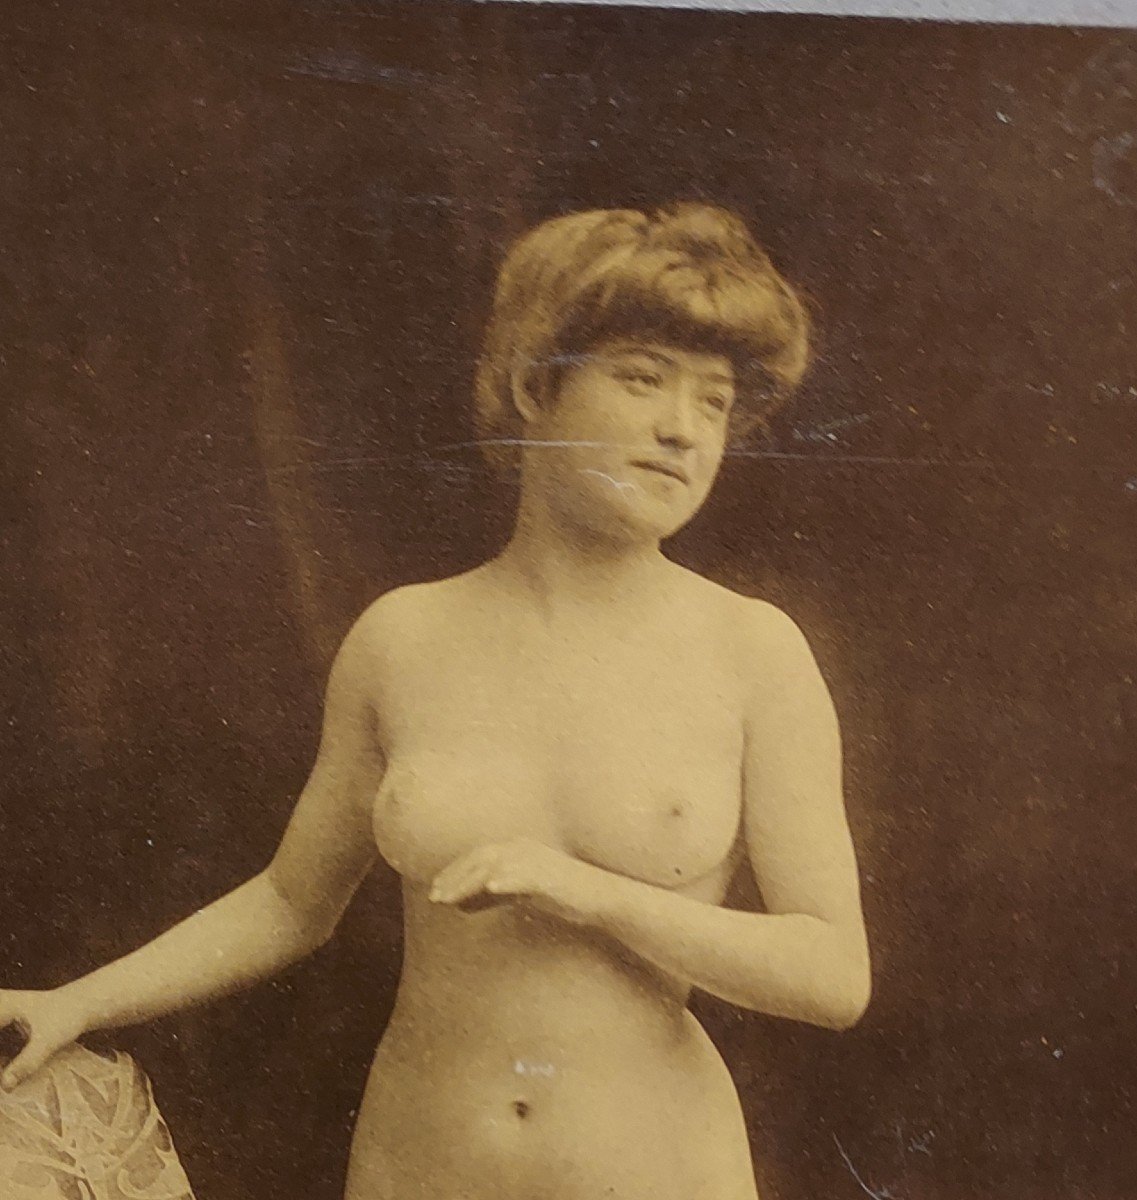 Lot Of 8 Photos Of Naked Women, Charming Photos, Erotica